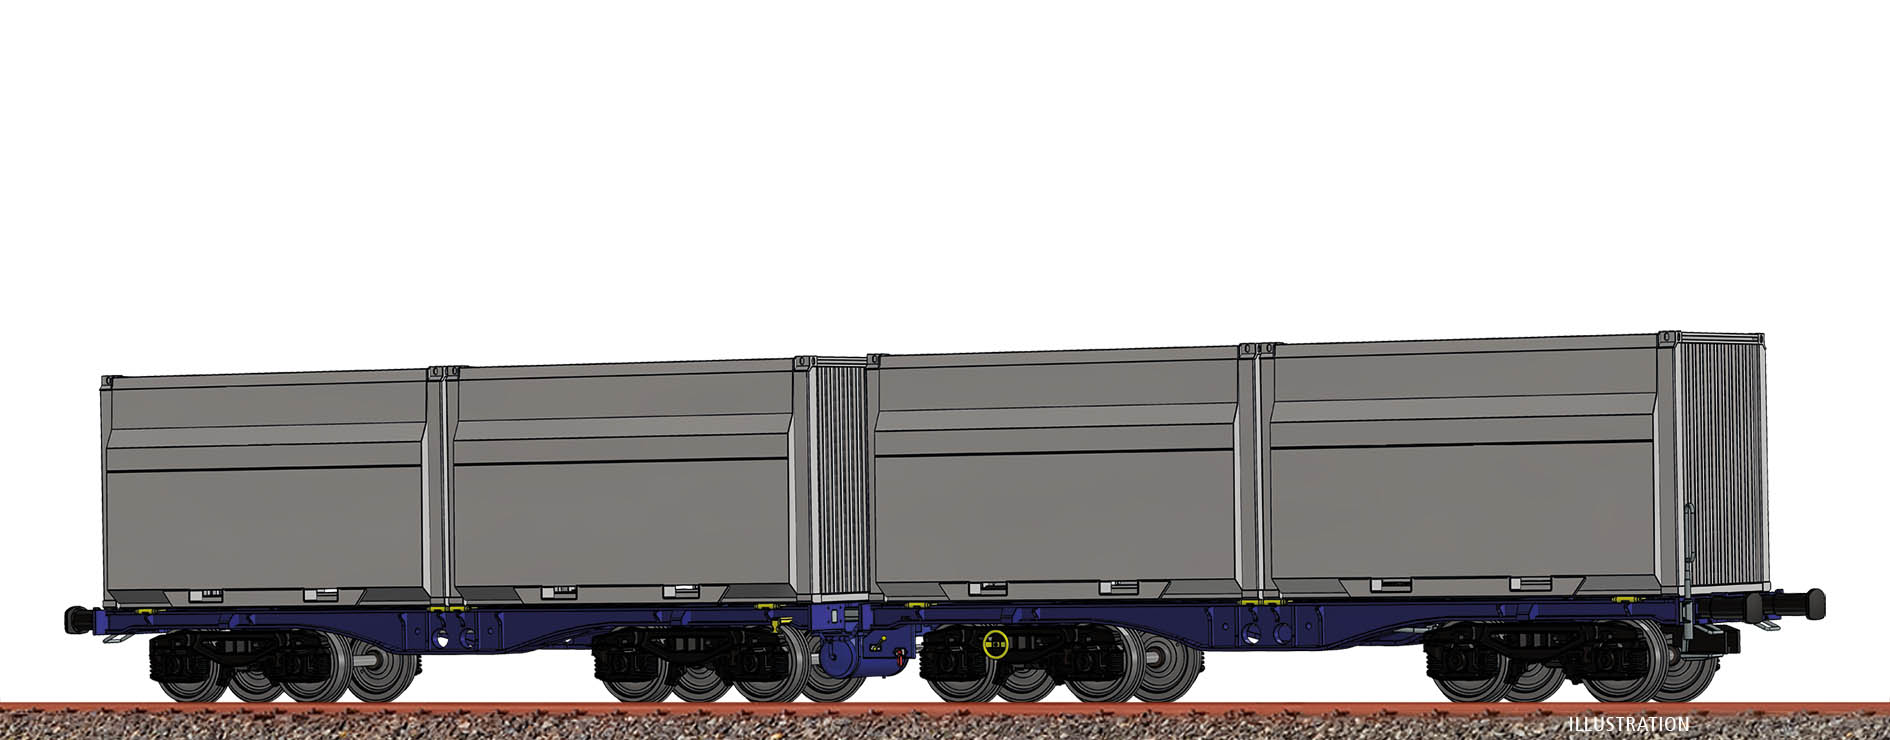 040-50664 - H0 - Flachwagen Sggmmrrs DB AG, VI, ArcelorMittal